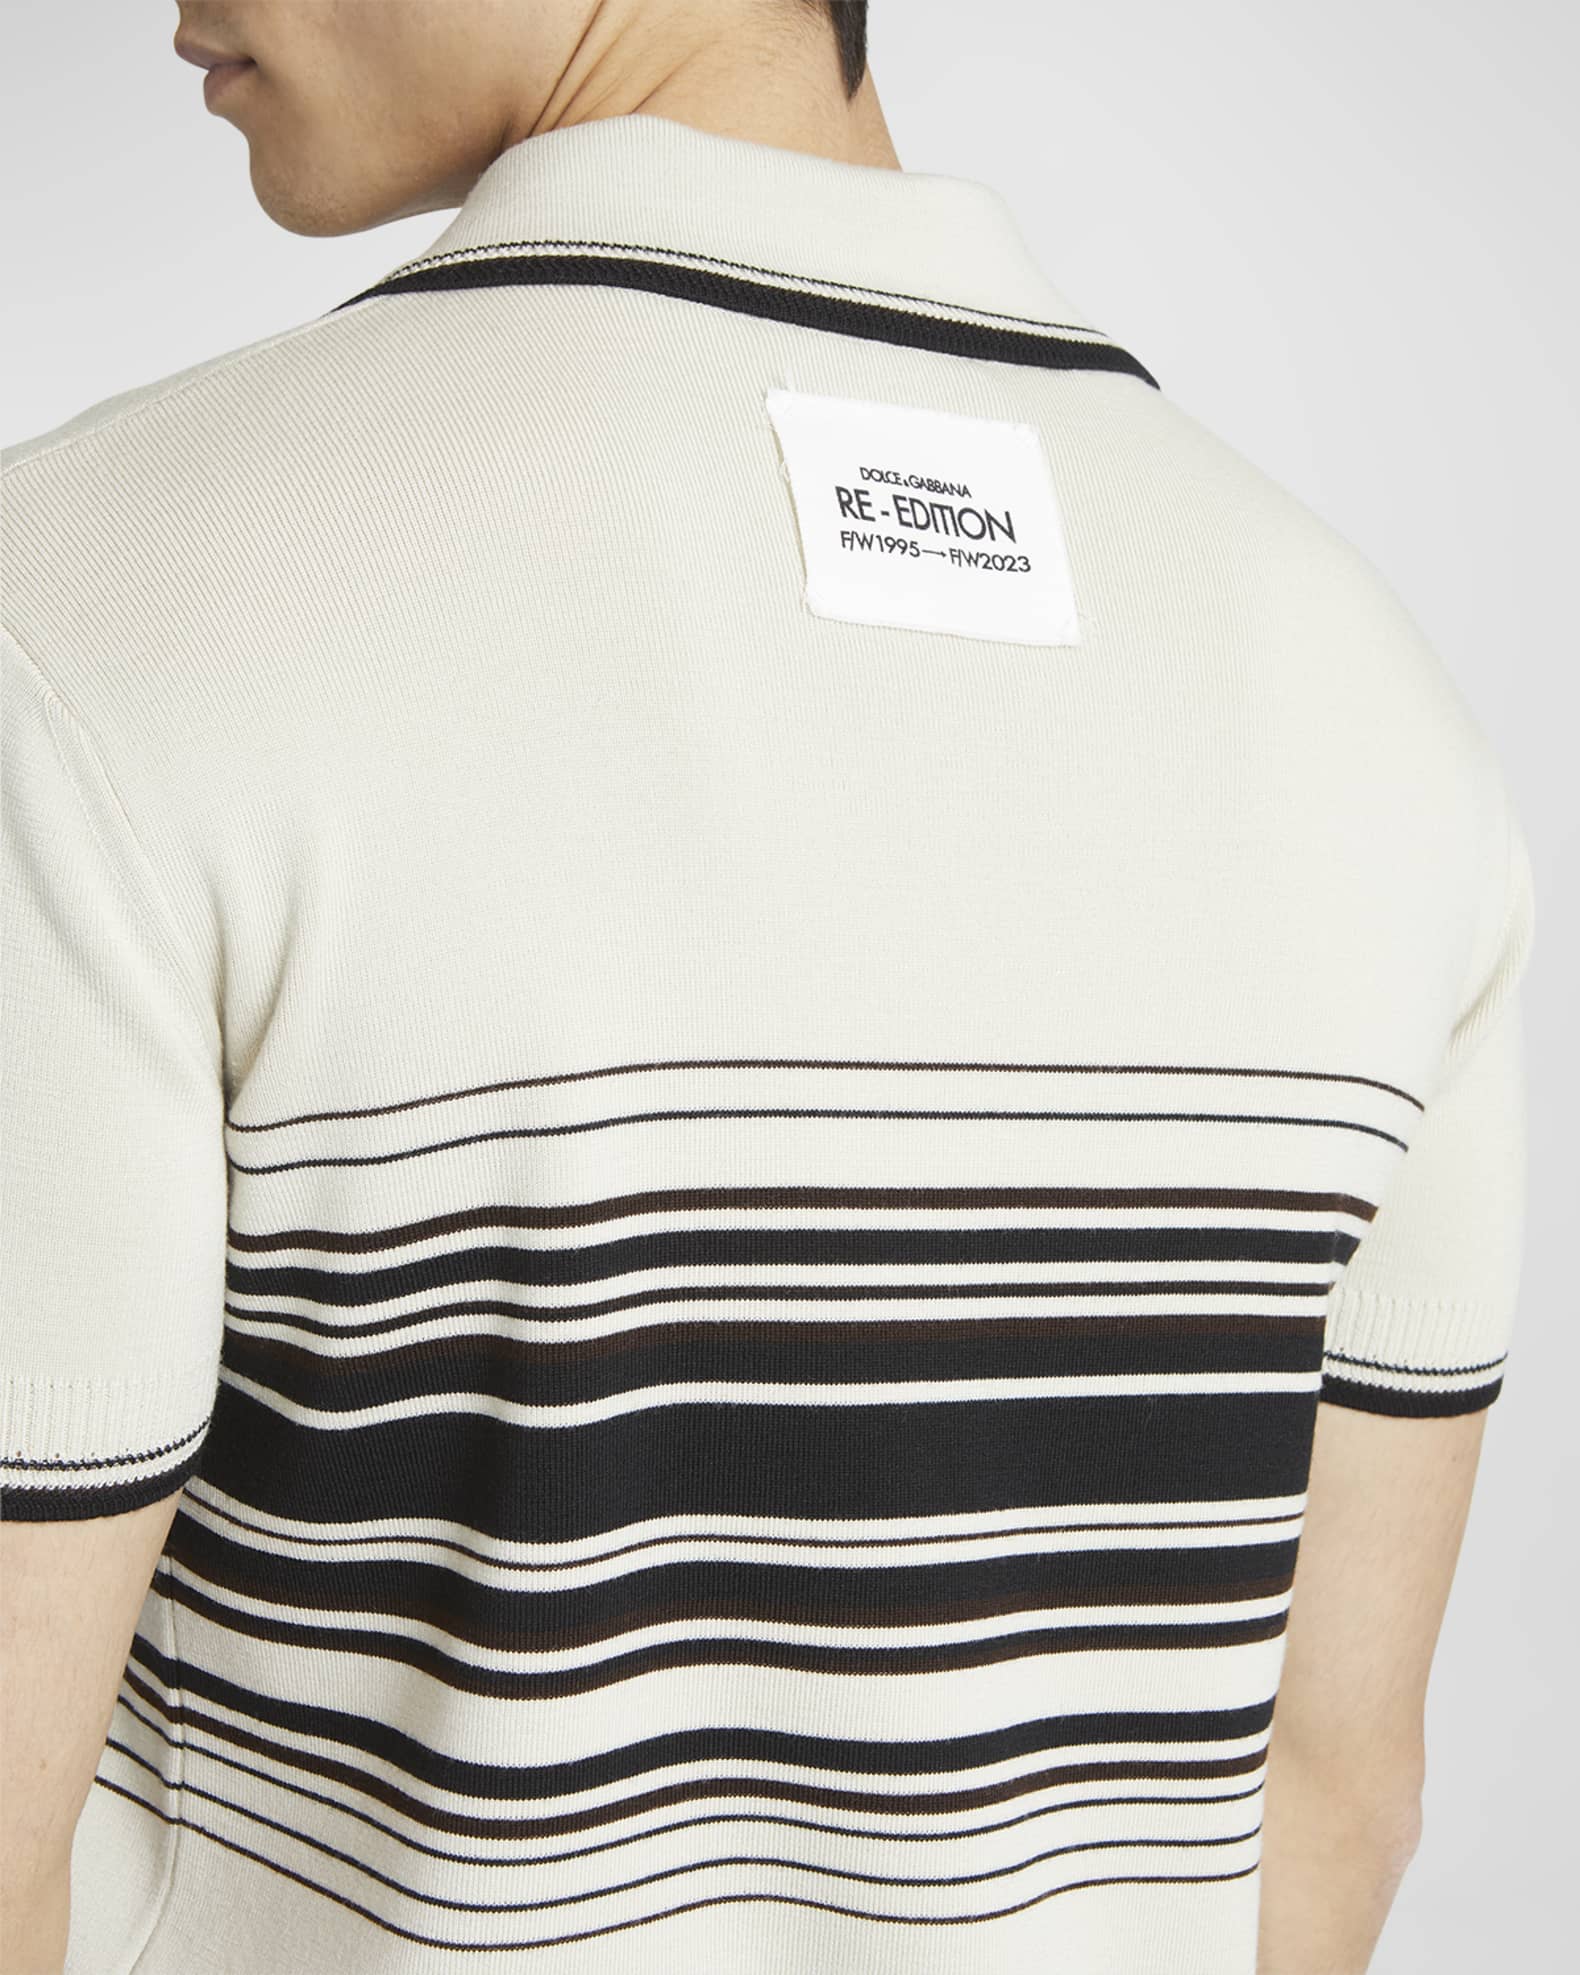 Dolce&Gabbana Men's Retro Knit Polo Shirt | Neiman Marcus